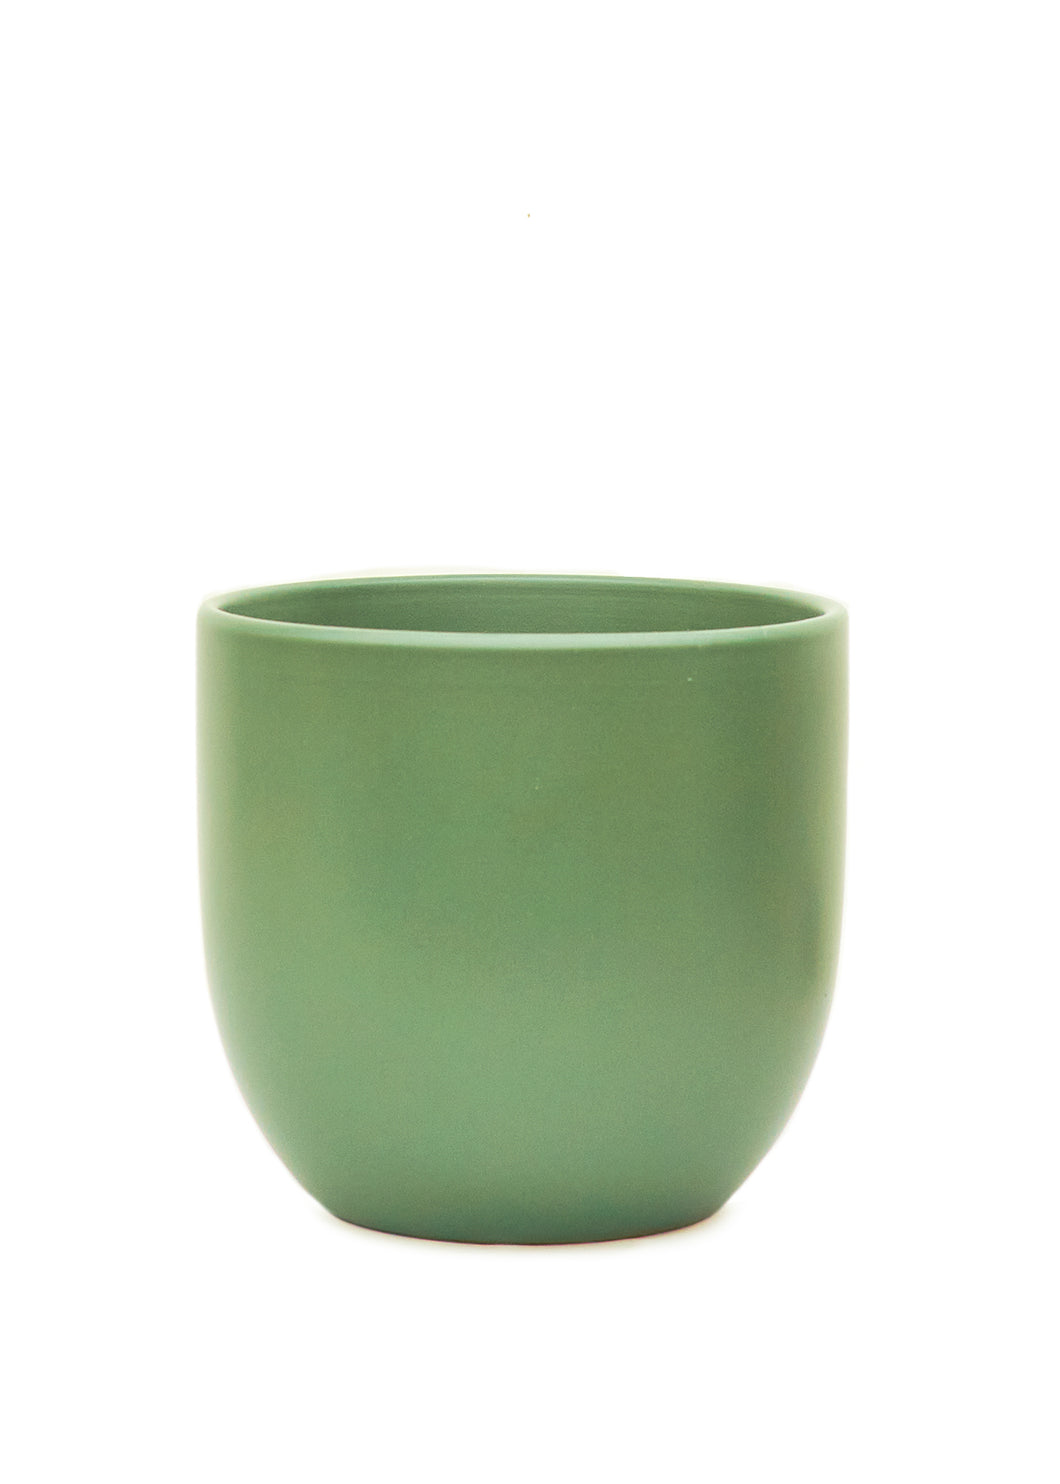 Rounded Ceramic Planter, Green 7